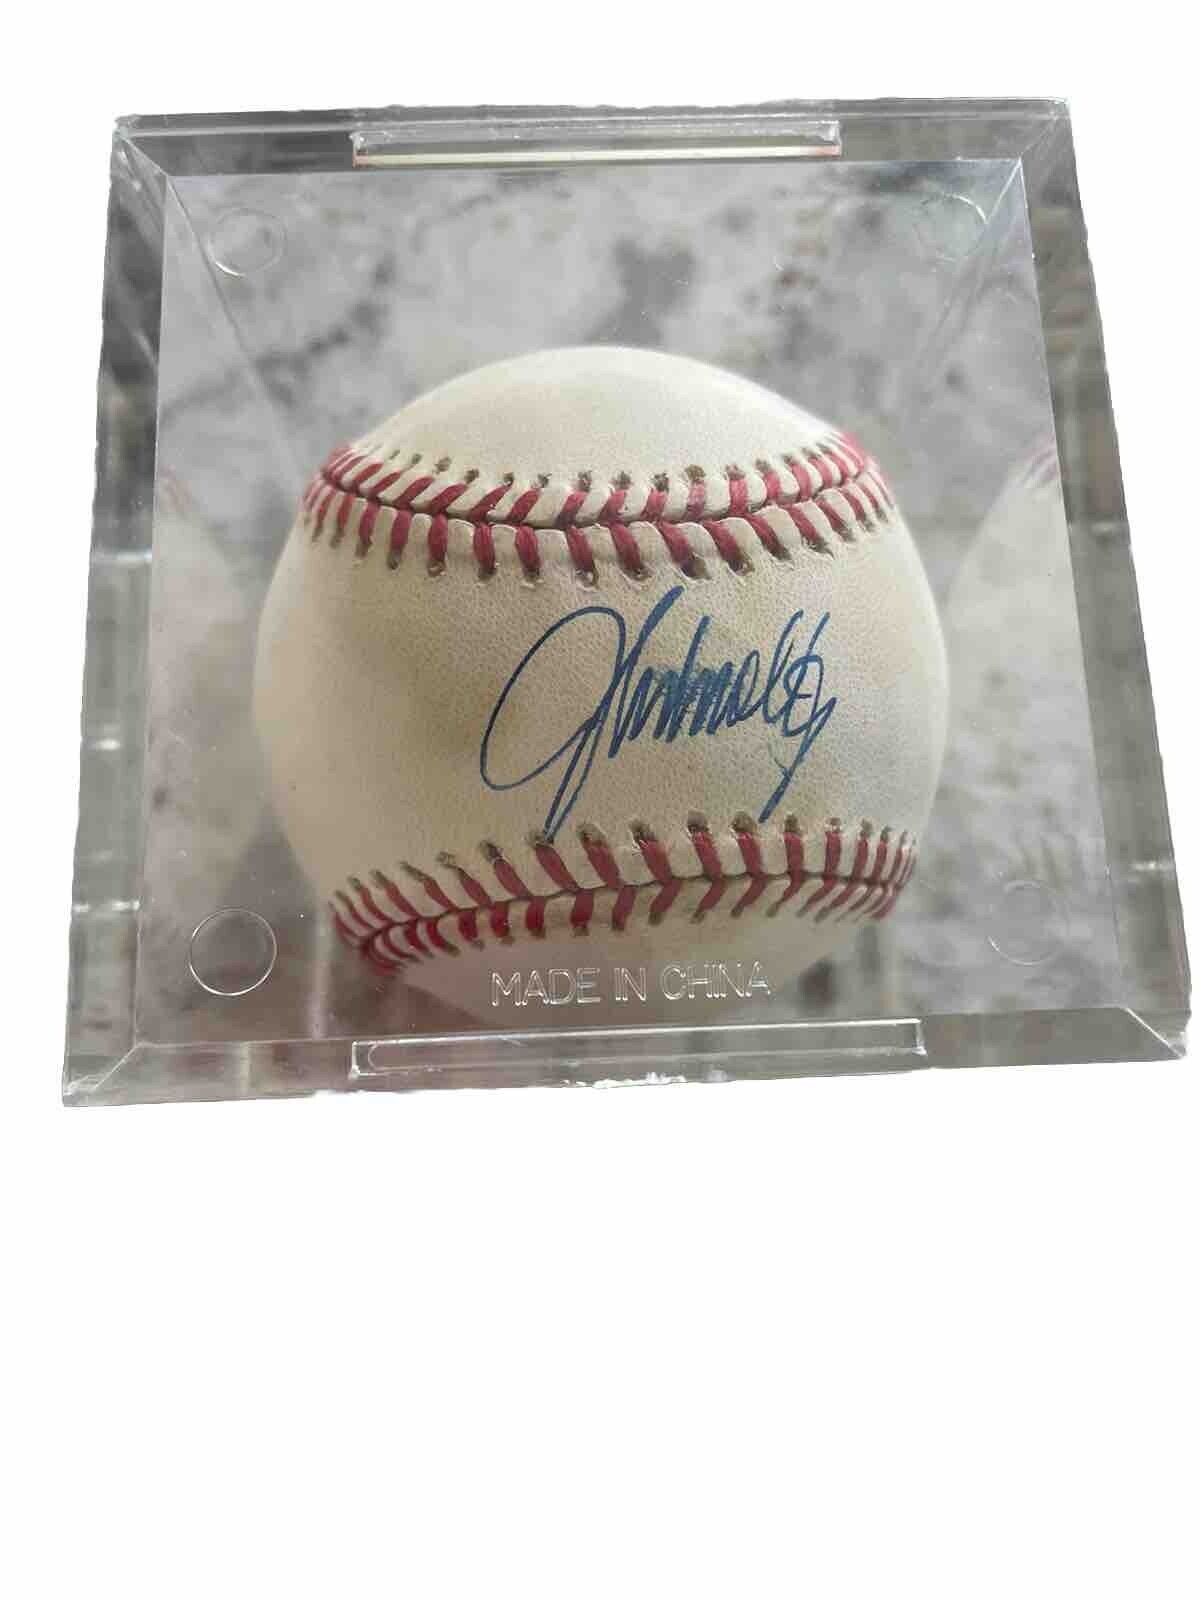 John Smoltz, MLB Atlanta Braves Pitcher, autographed baseball